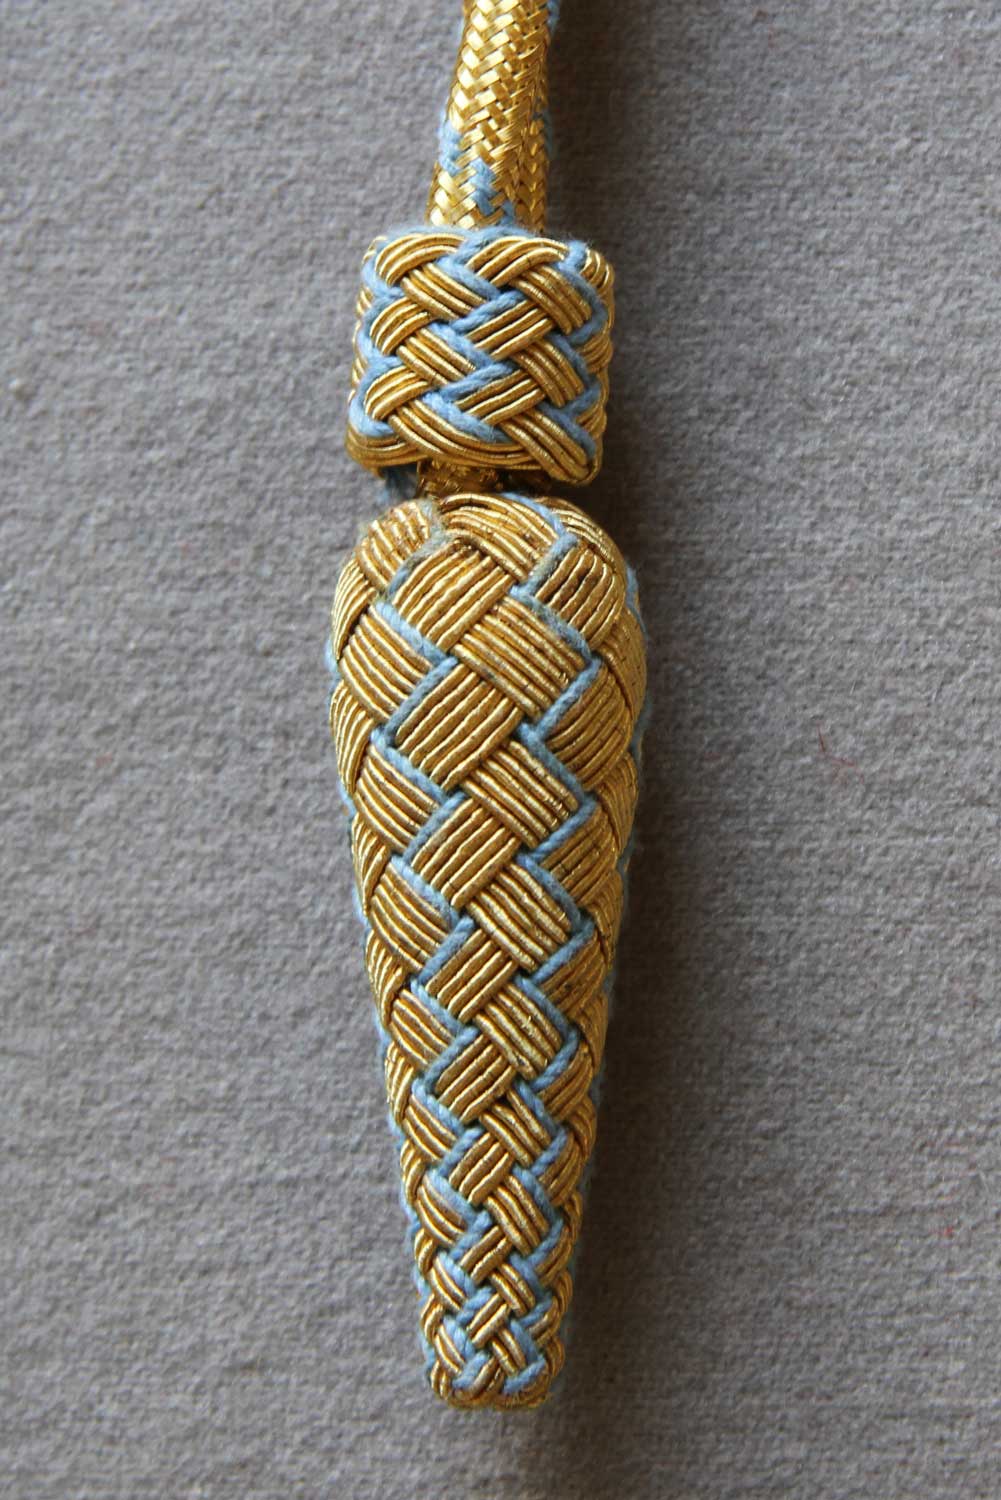 Royal Air Force Sword Knot (cord)